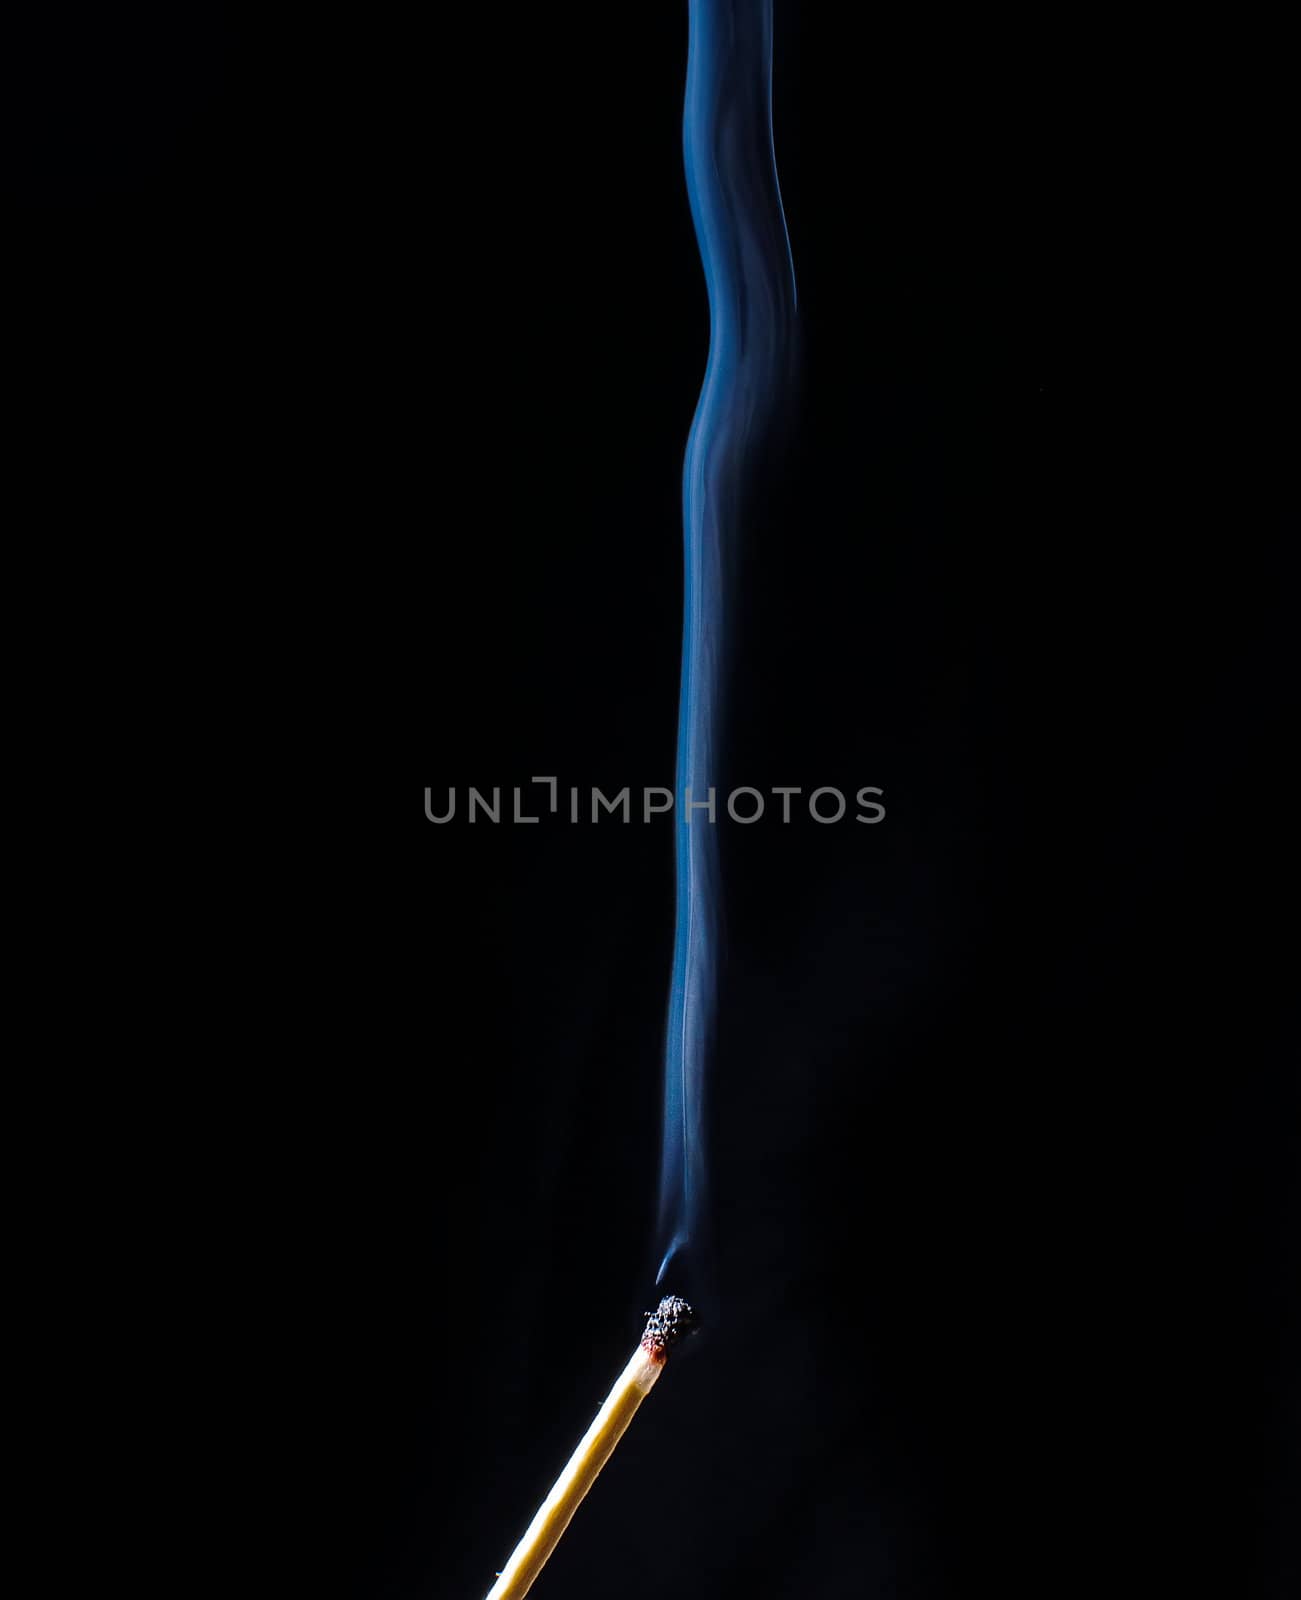 Fireless match and smoke wave on black background by dmitrimaruta